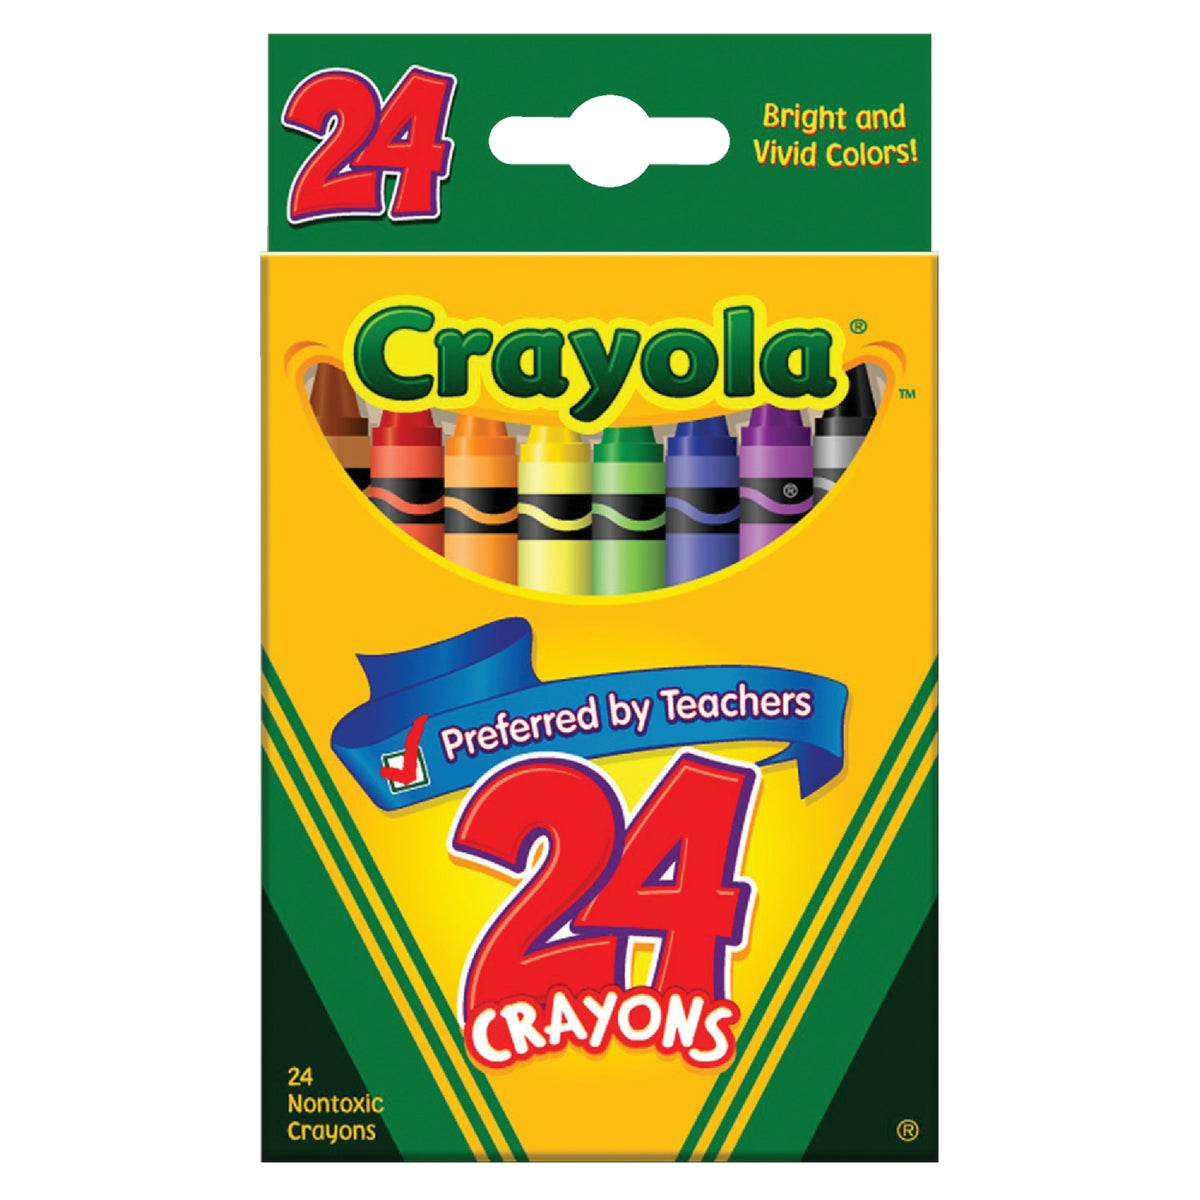 Item 970697, Nontoxic Crayola crayons in traditional bright and vivid colors.